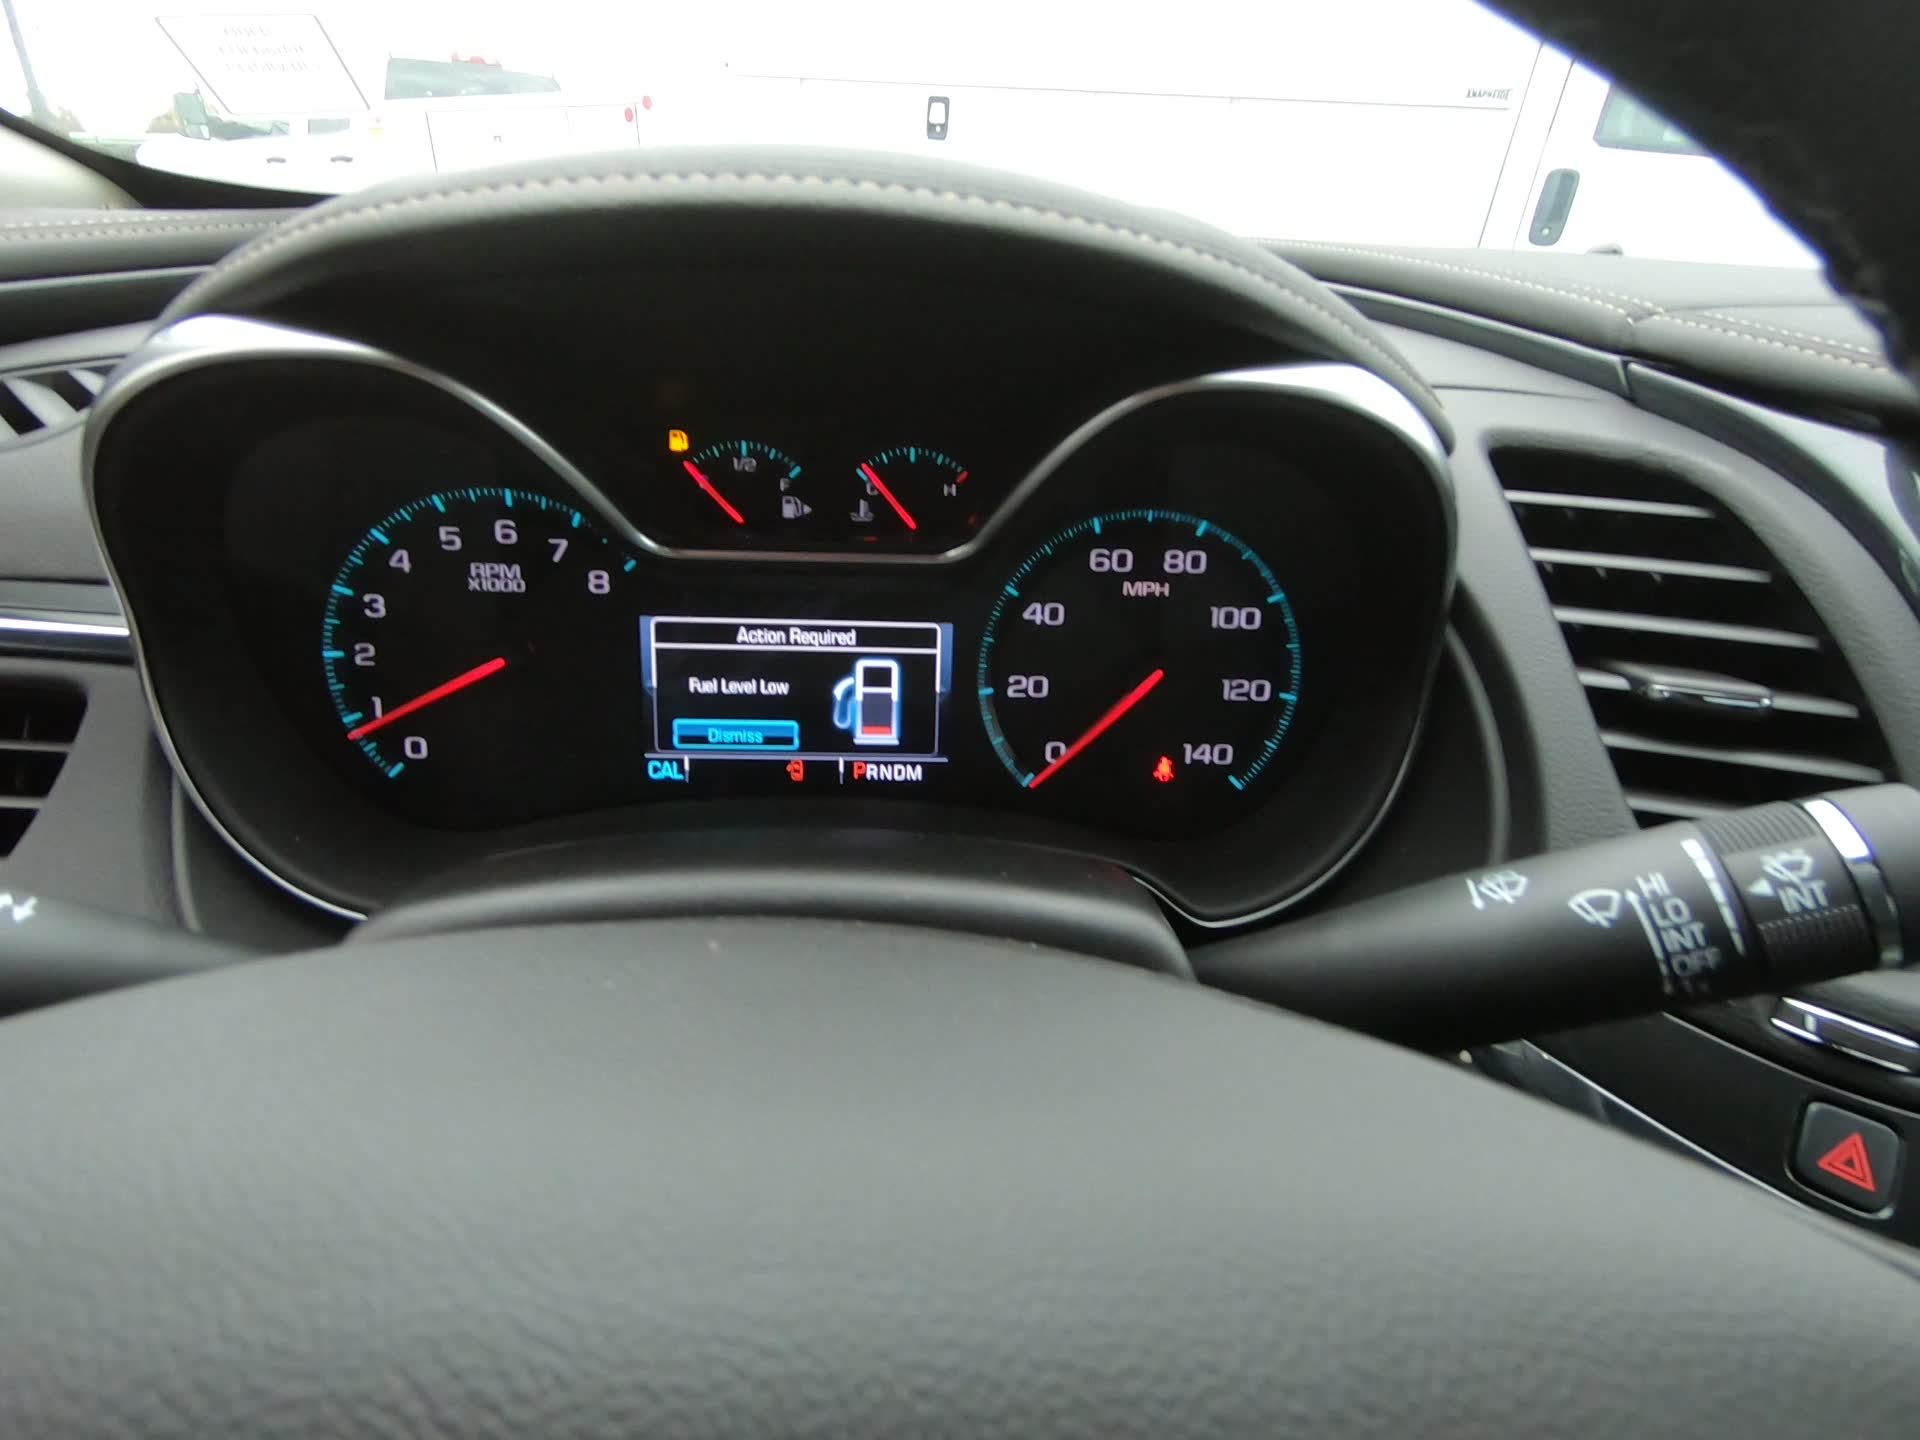 New 2019 Chevrolet Impala Premier With Navigation